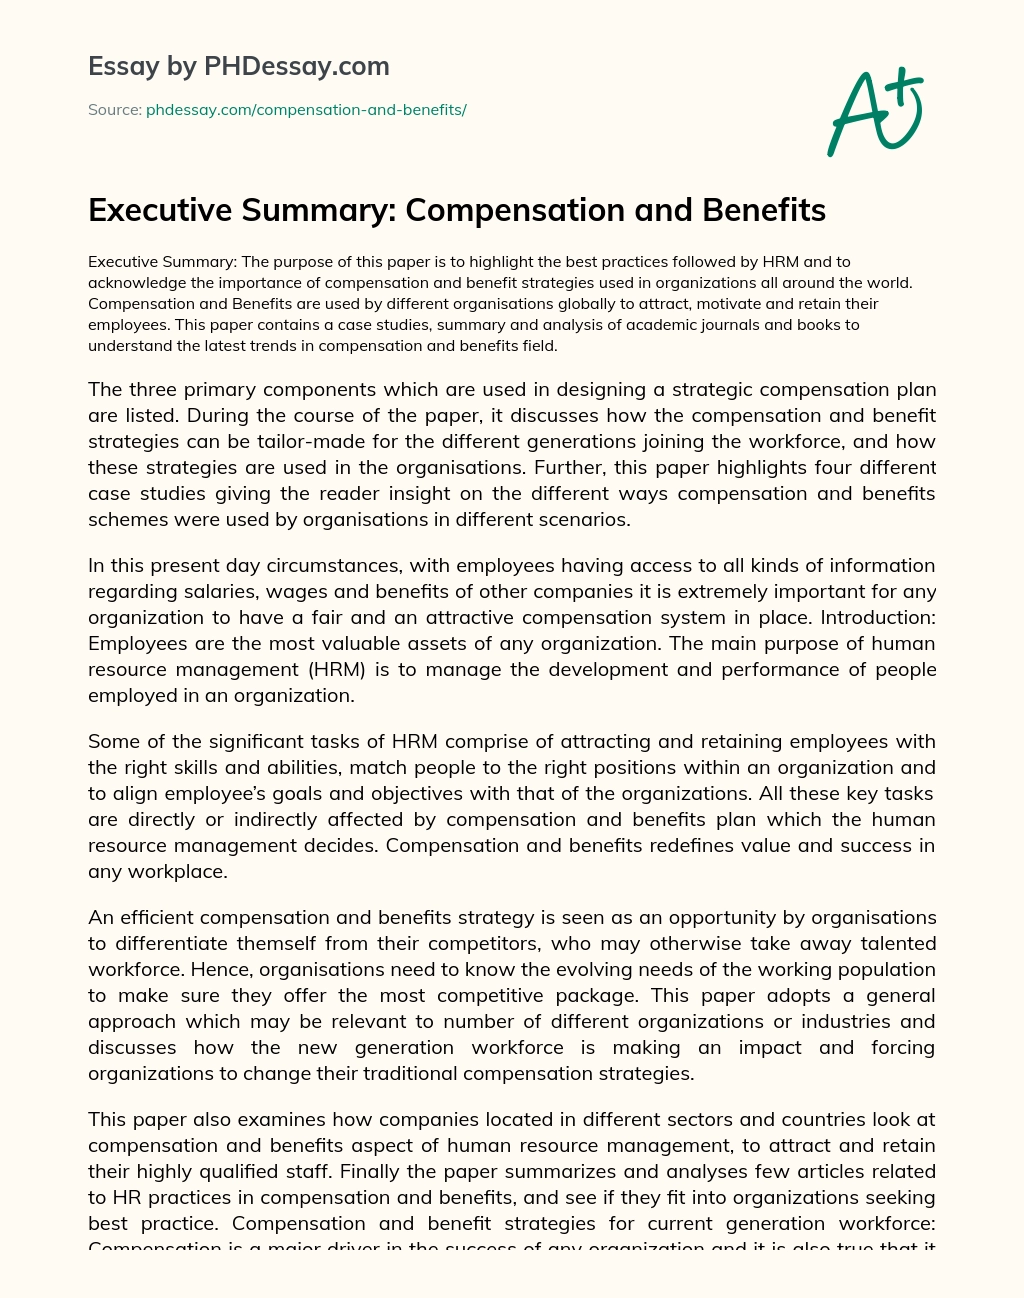 Executive Summary: Compensation and Benefits essay